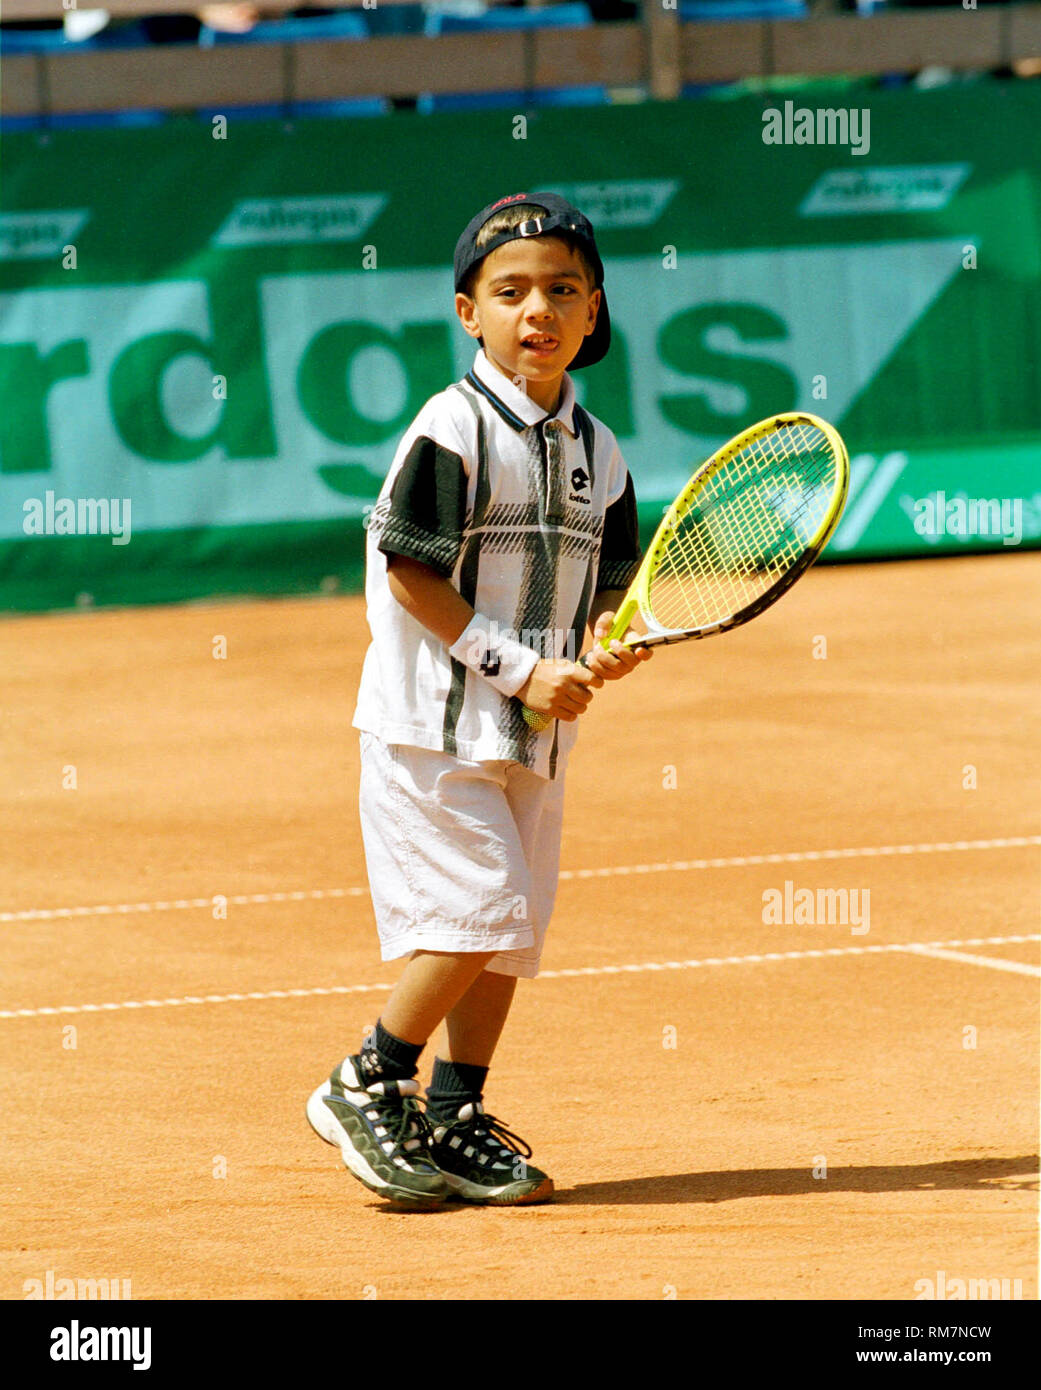 Rochus Club Dusseldorf (DŸsseldorf, Duesseldorf) Germany 14.5.1999, Tennis:  World Team Cup --- Noah Becker, son of Boris Becker Stock Photo - Alamy